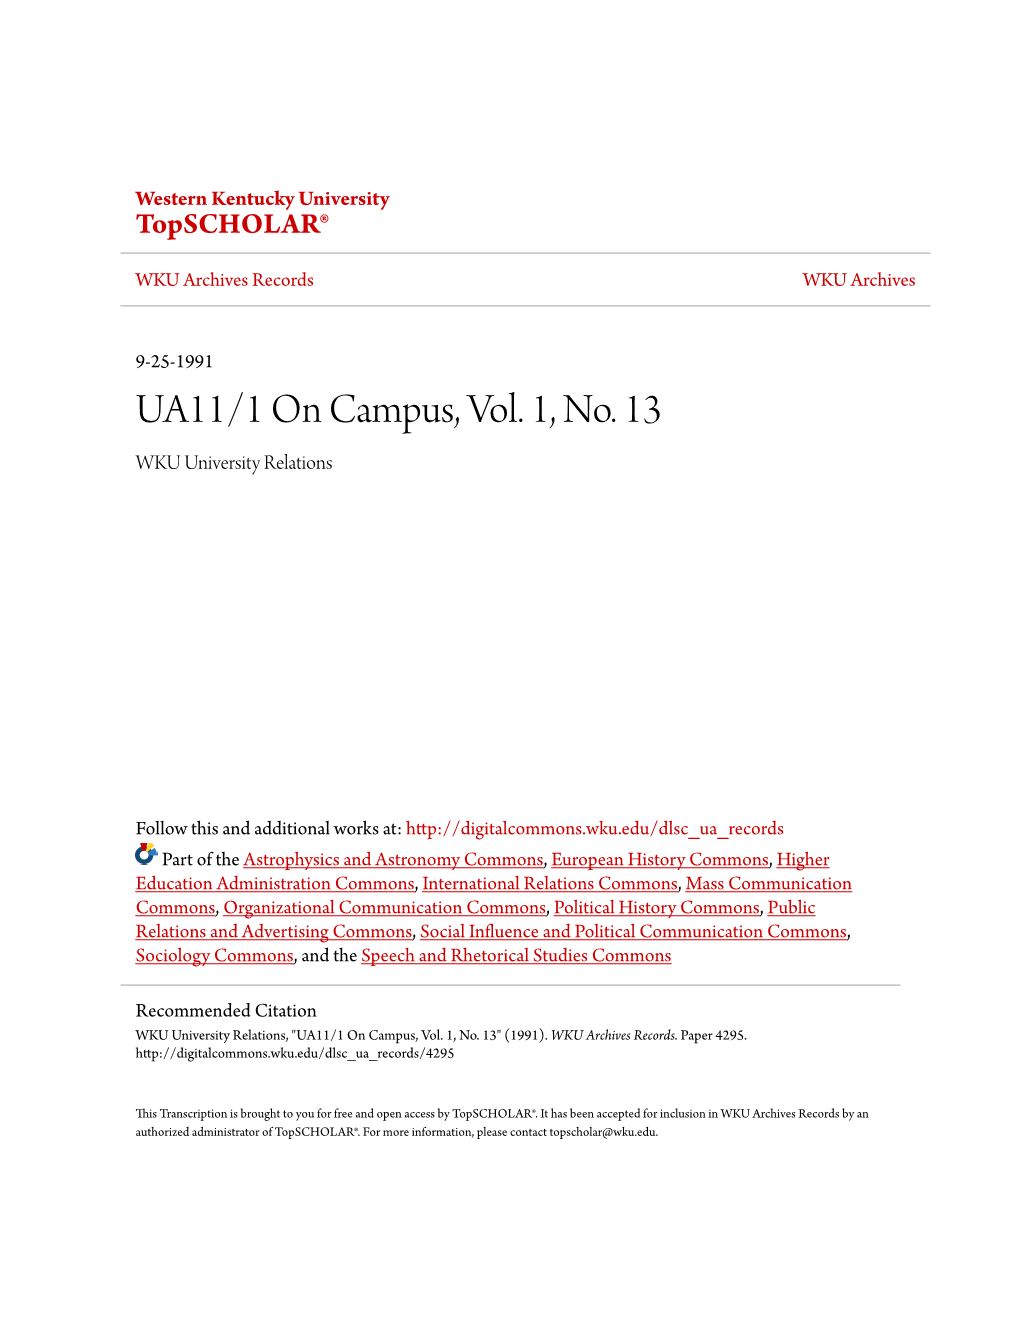 UA11/1 on Campus, Vol. 1, No. 13 WKU University Relations